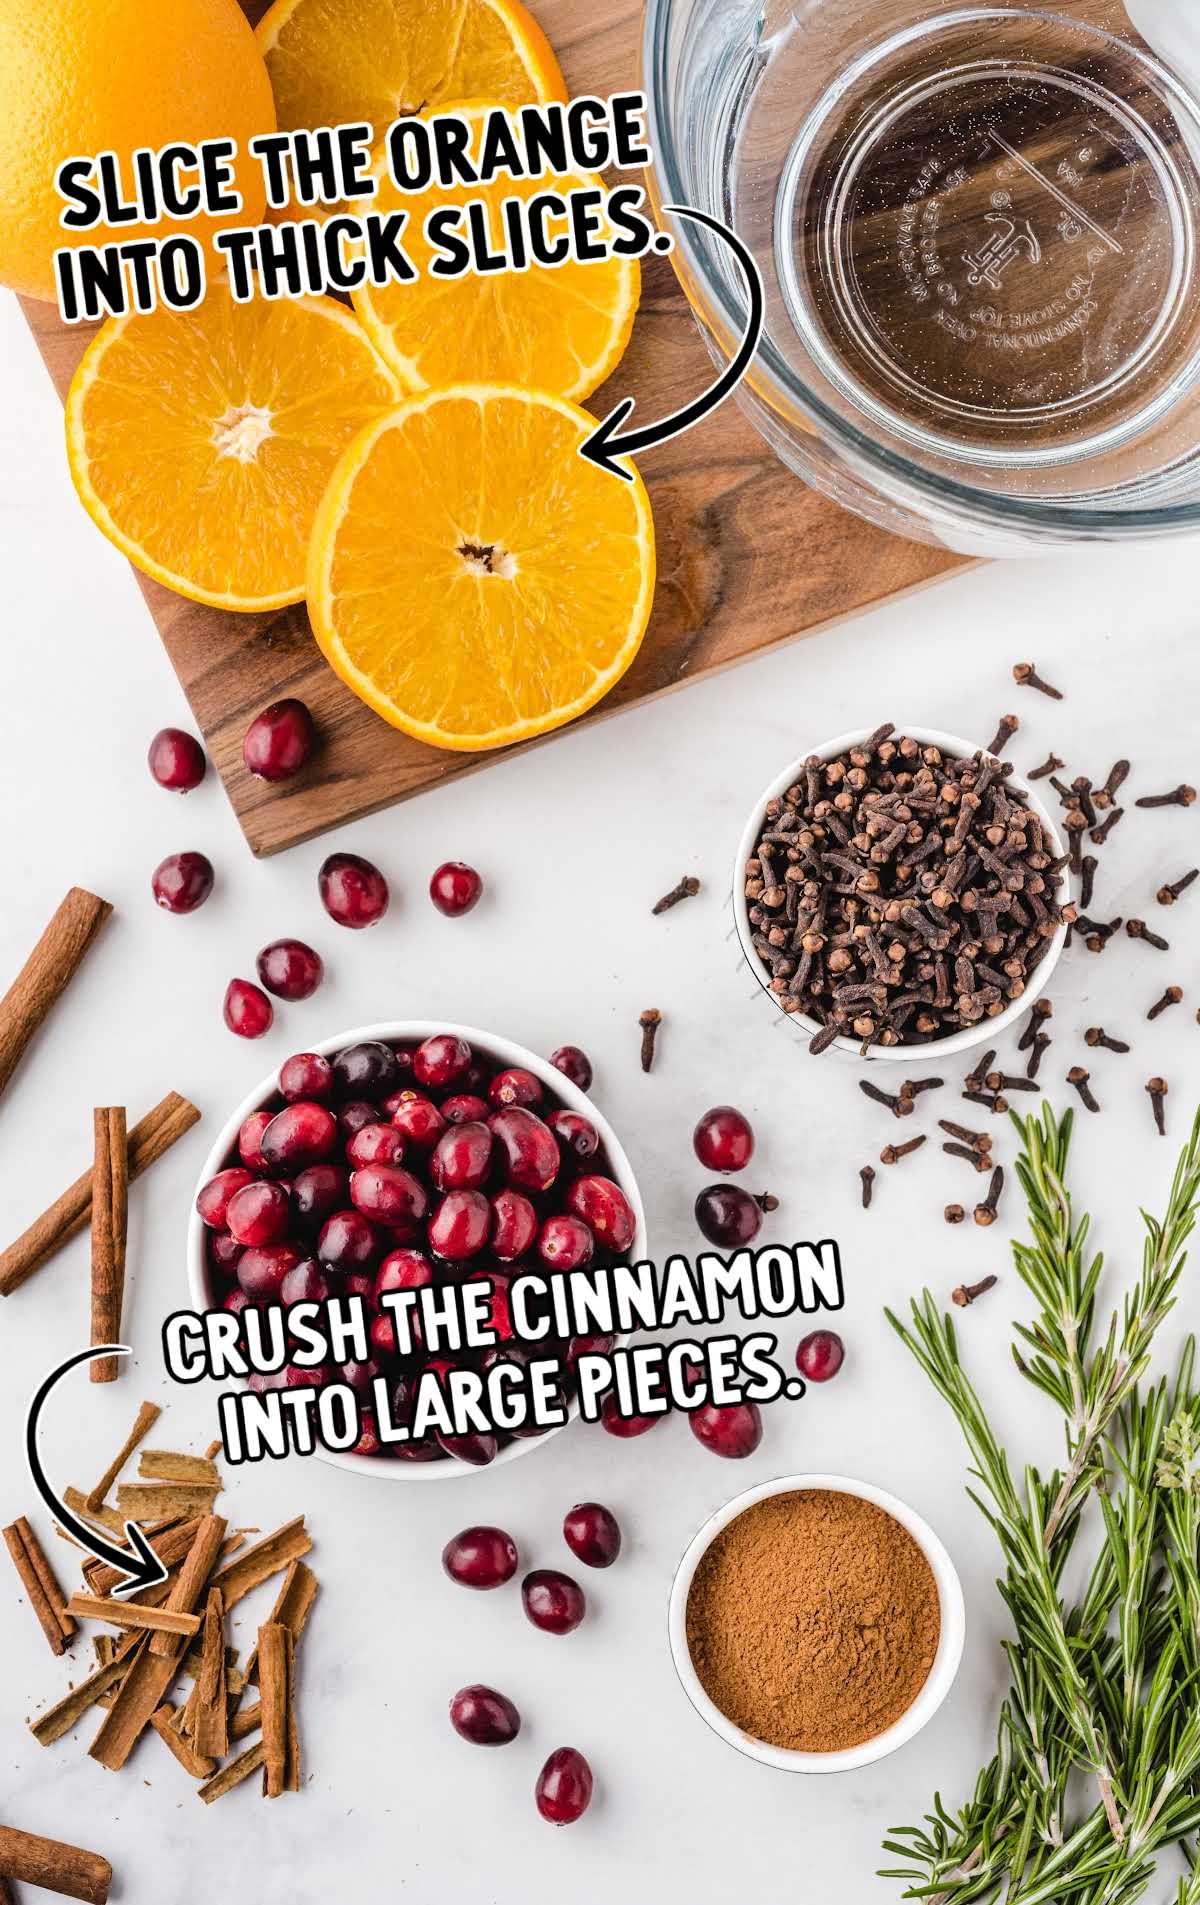 slice oranges and crush cinnamon